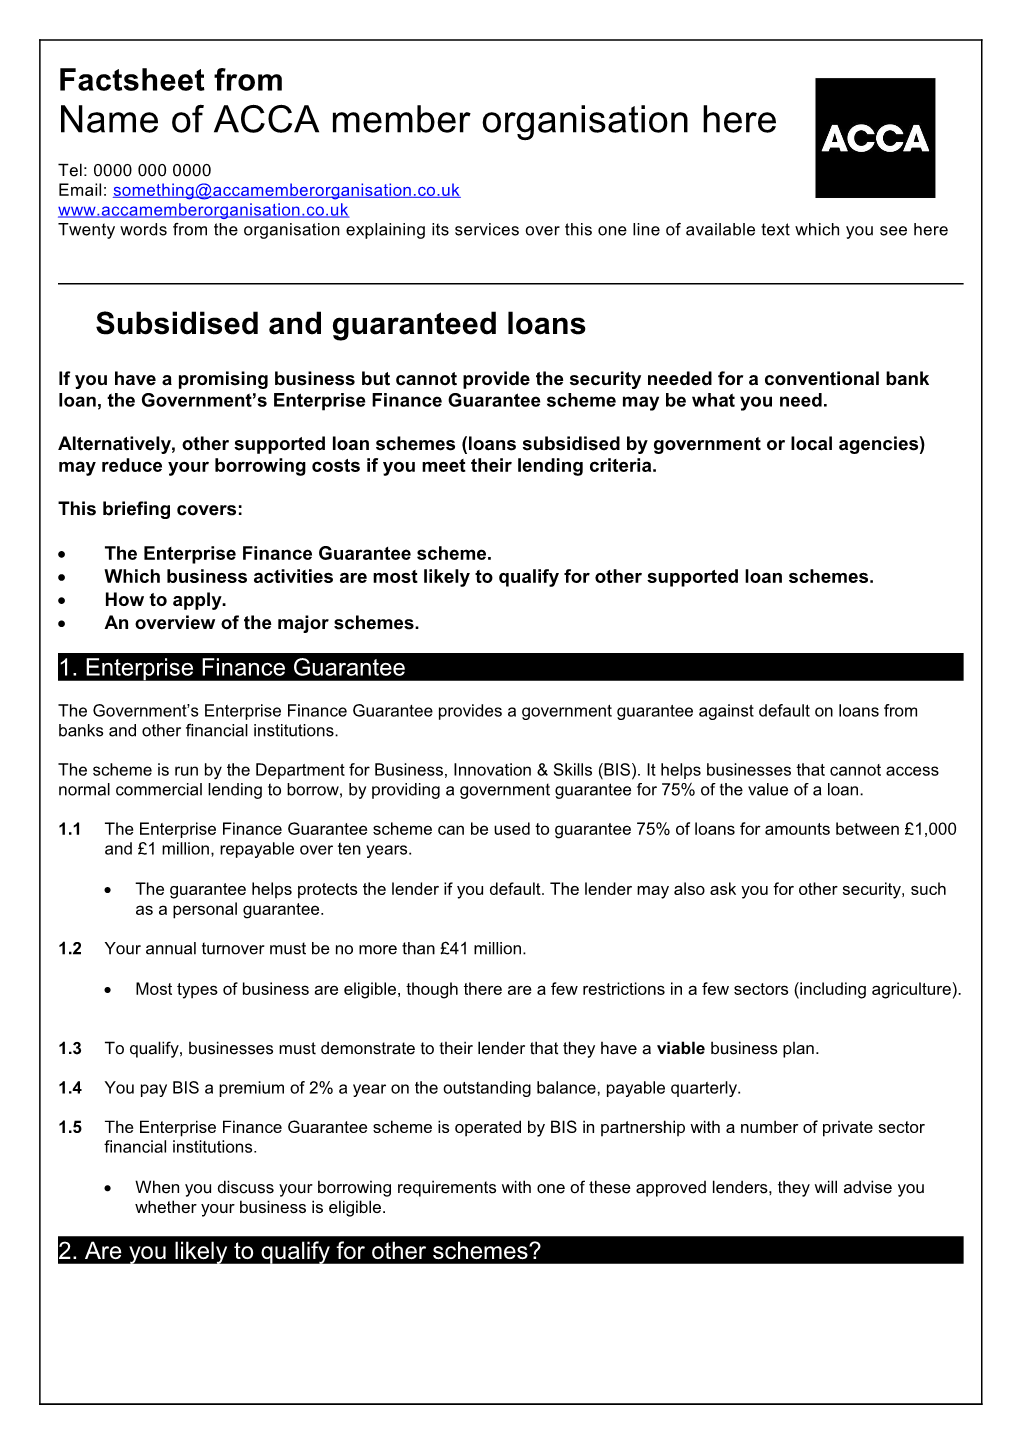 Subsidised and Guaranteed Loans